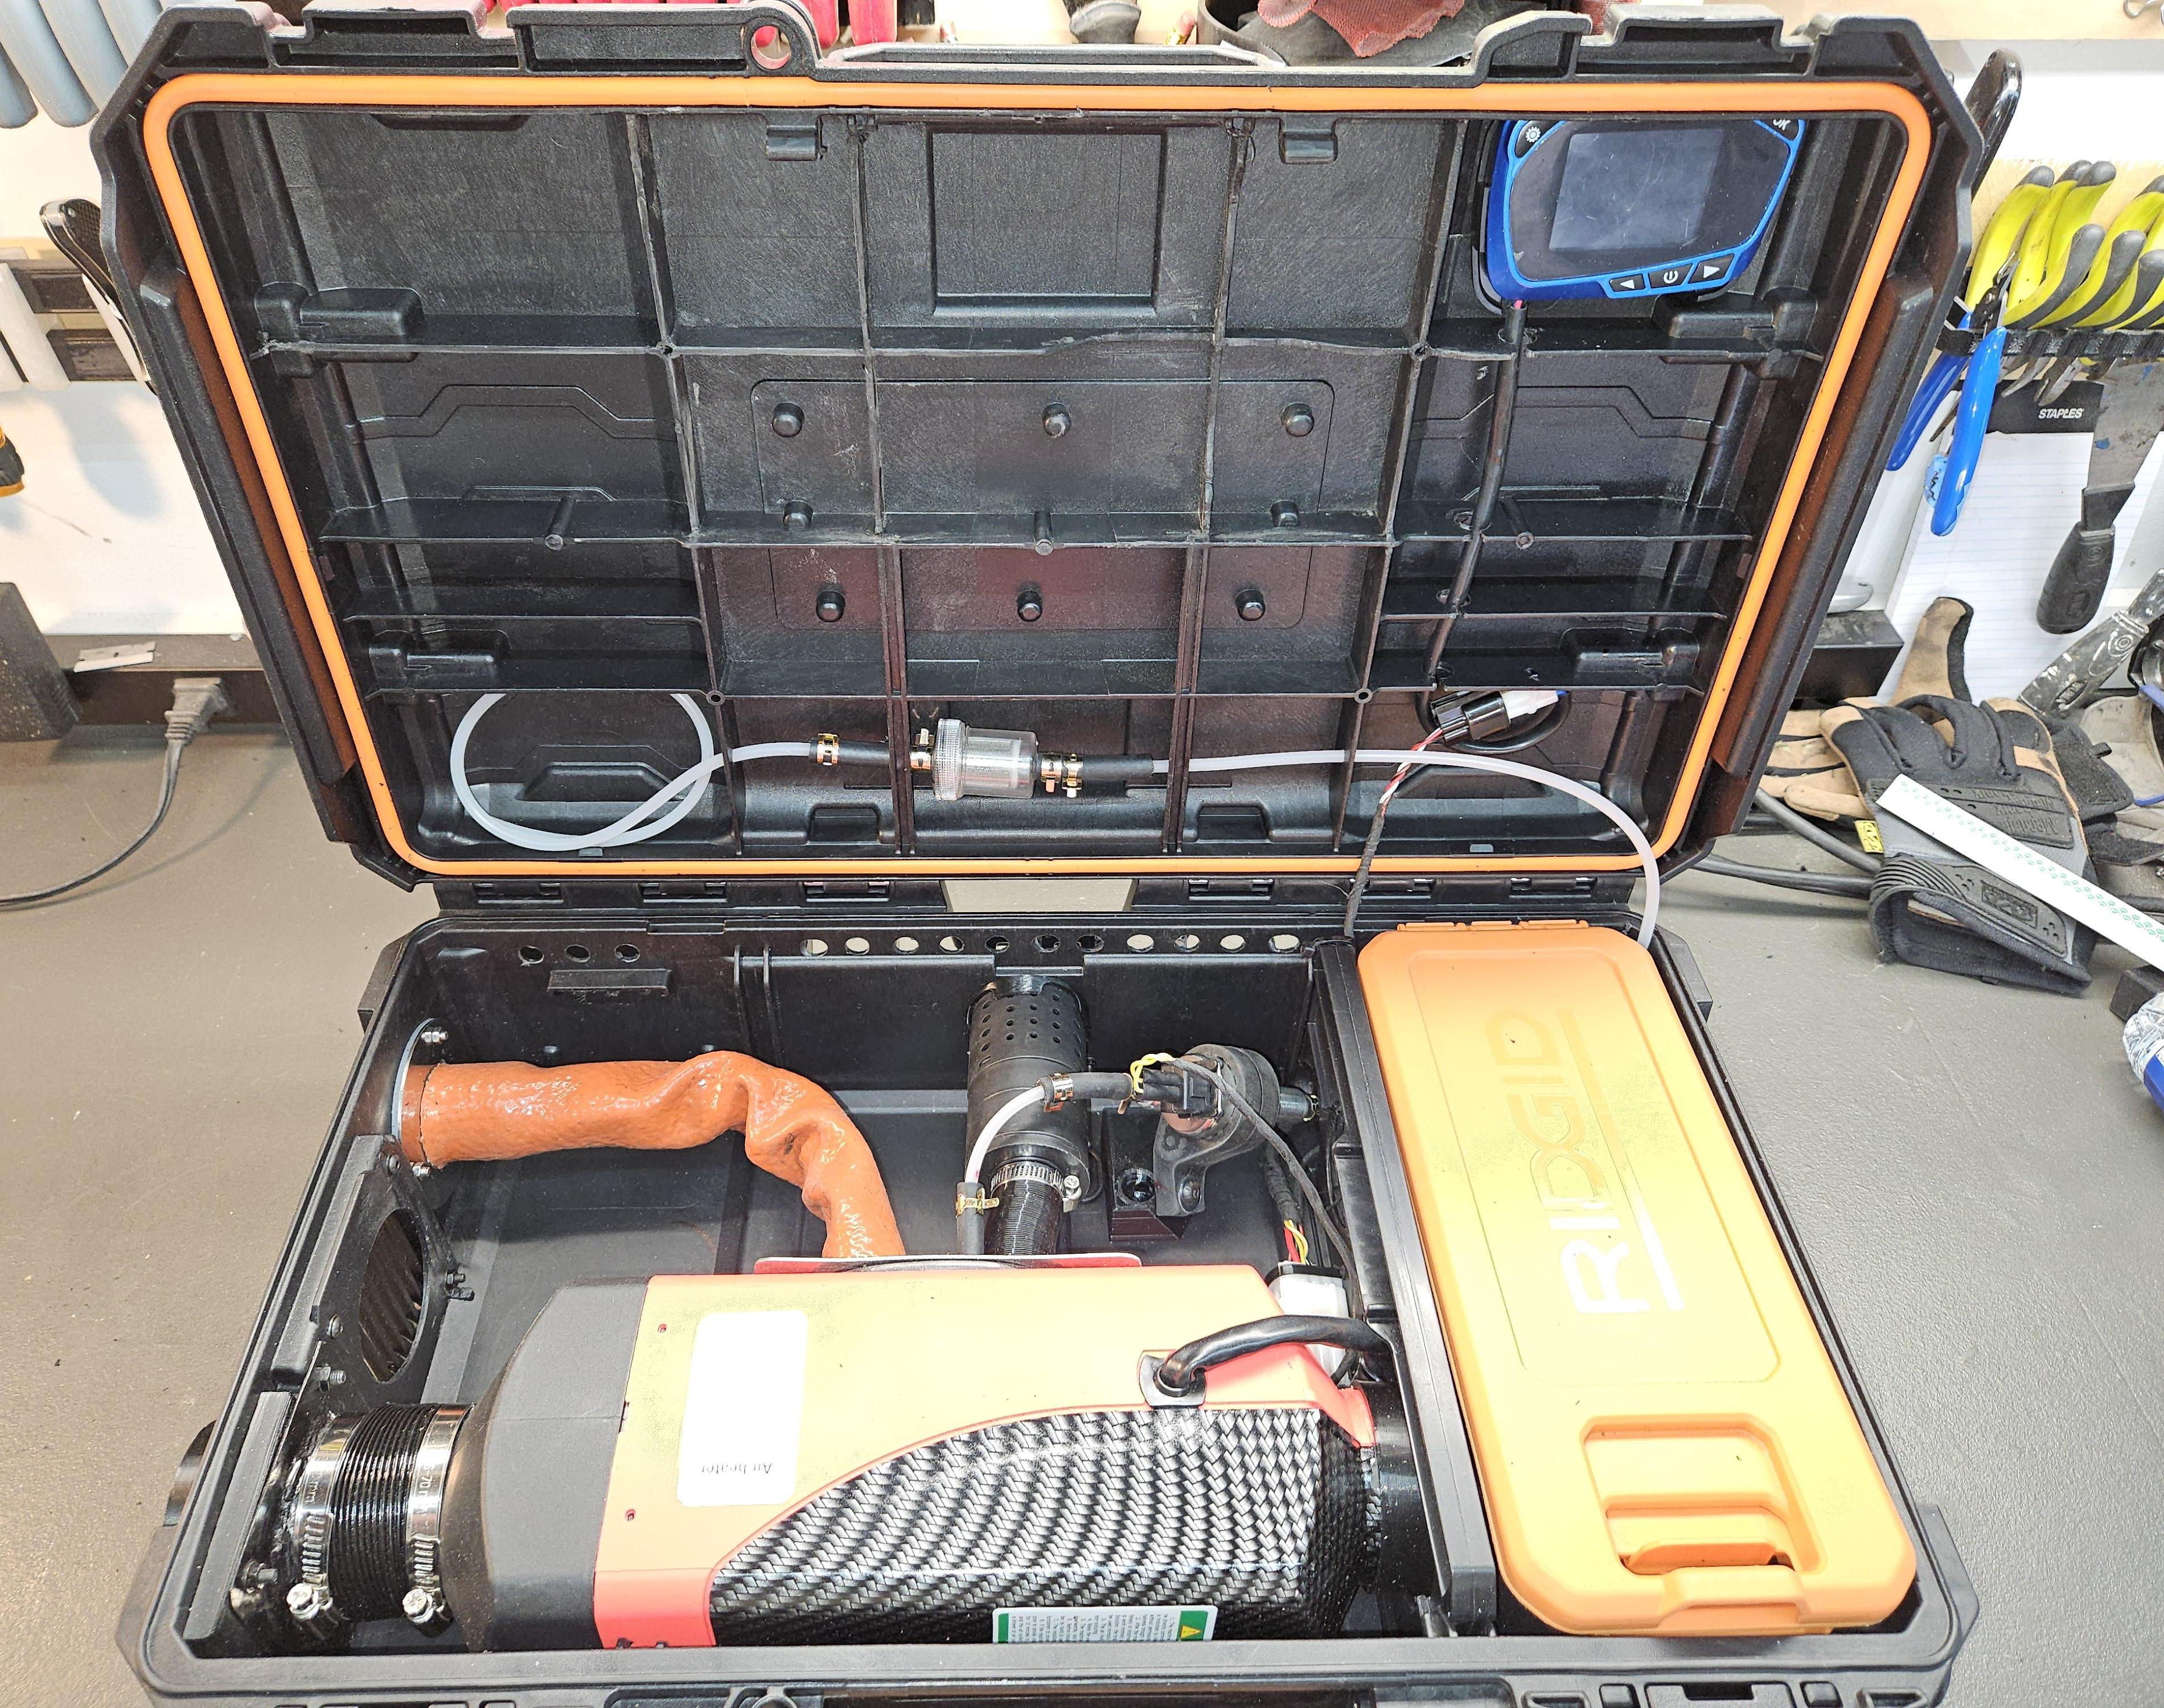 DIY All-in-One Diesel Heater Unit in a Ridgid Case